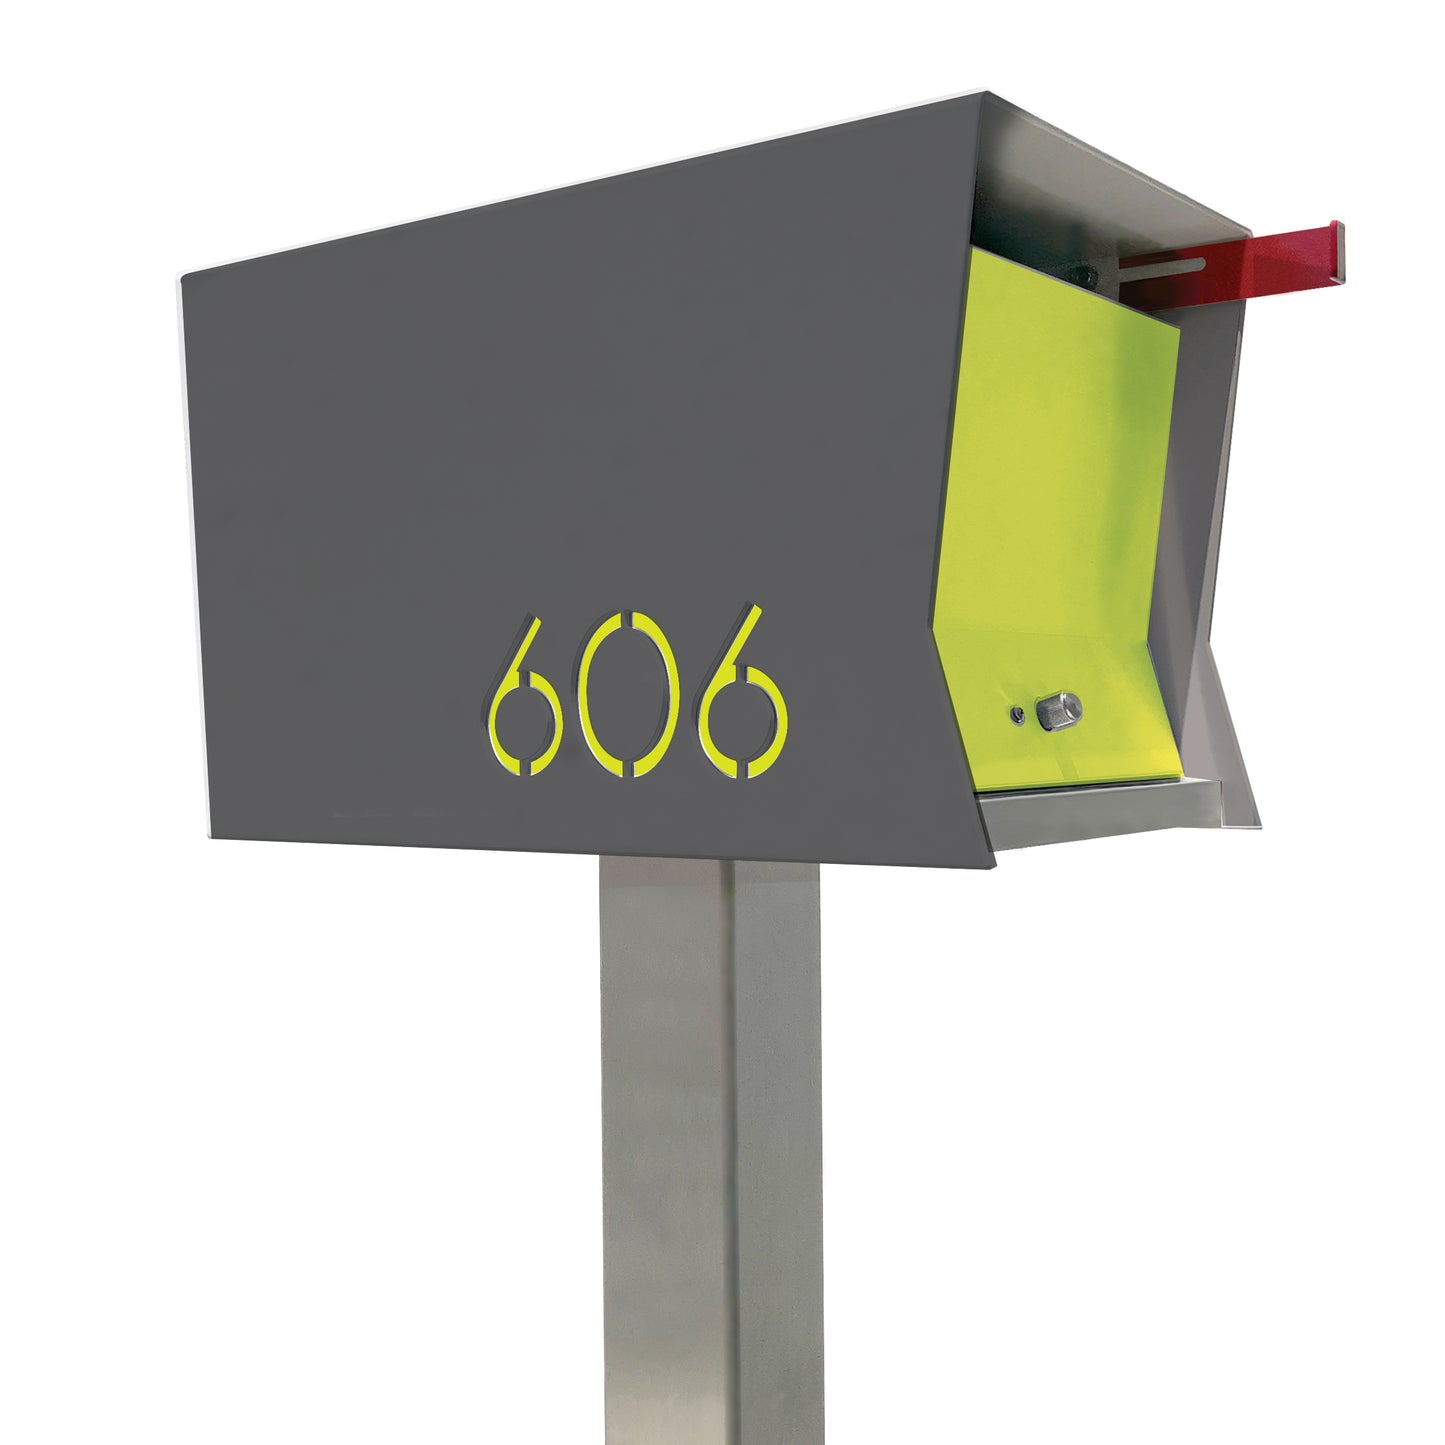 The Original Retrobox in DESIGNER GRAY - Modern Mailbox grey and green